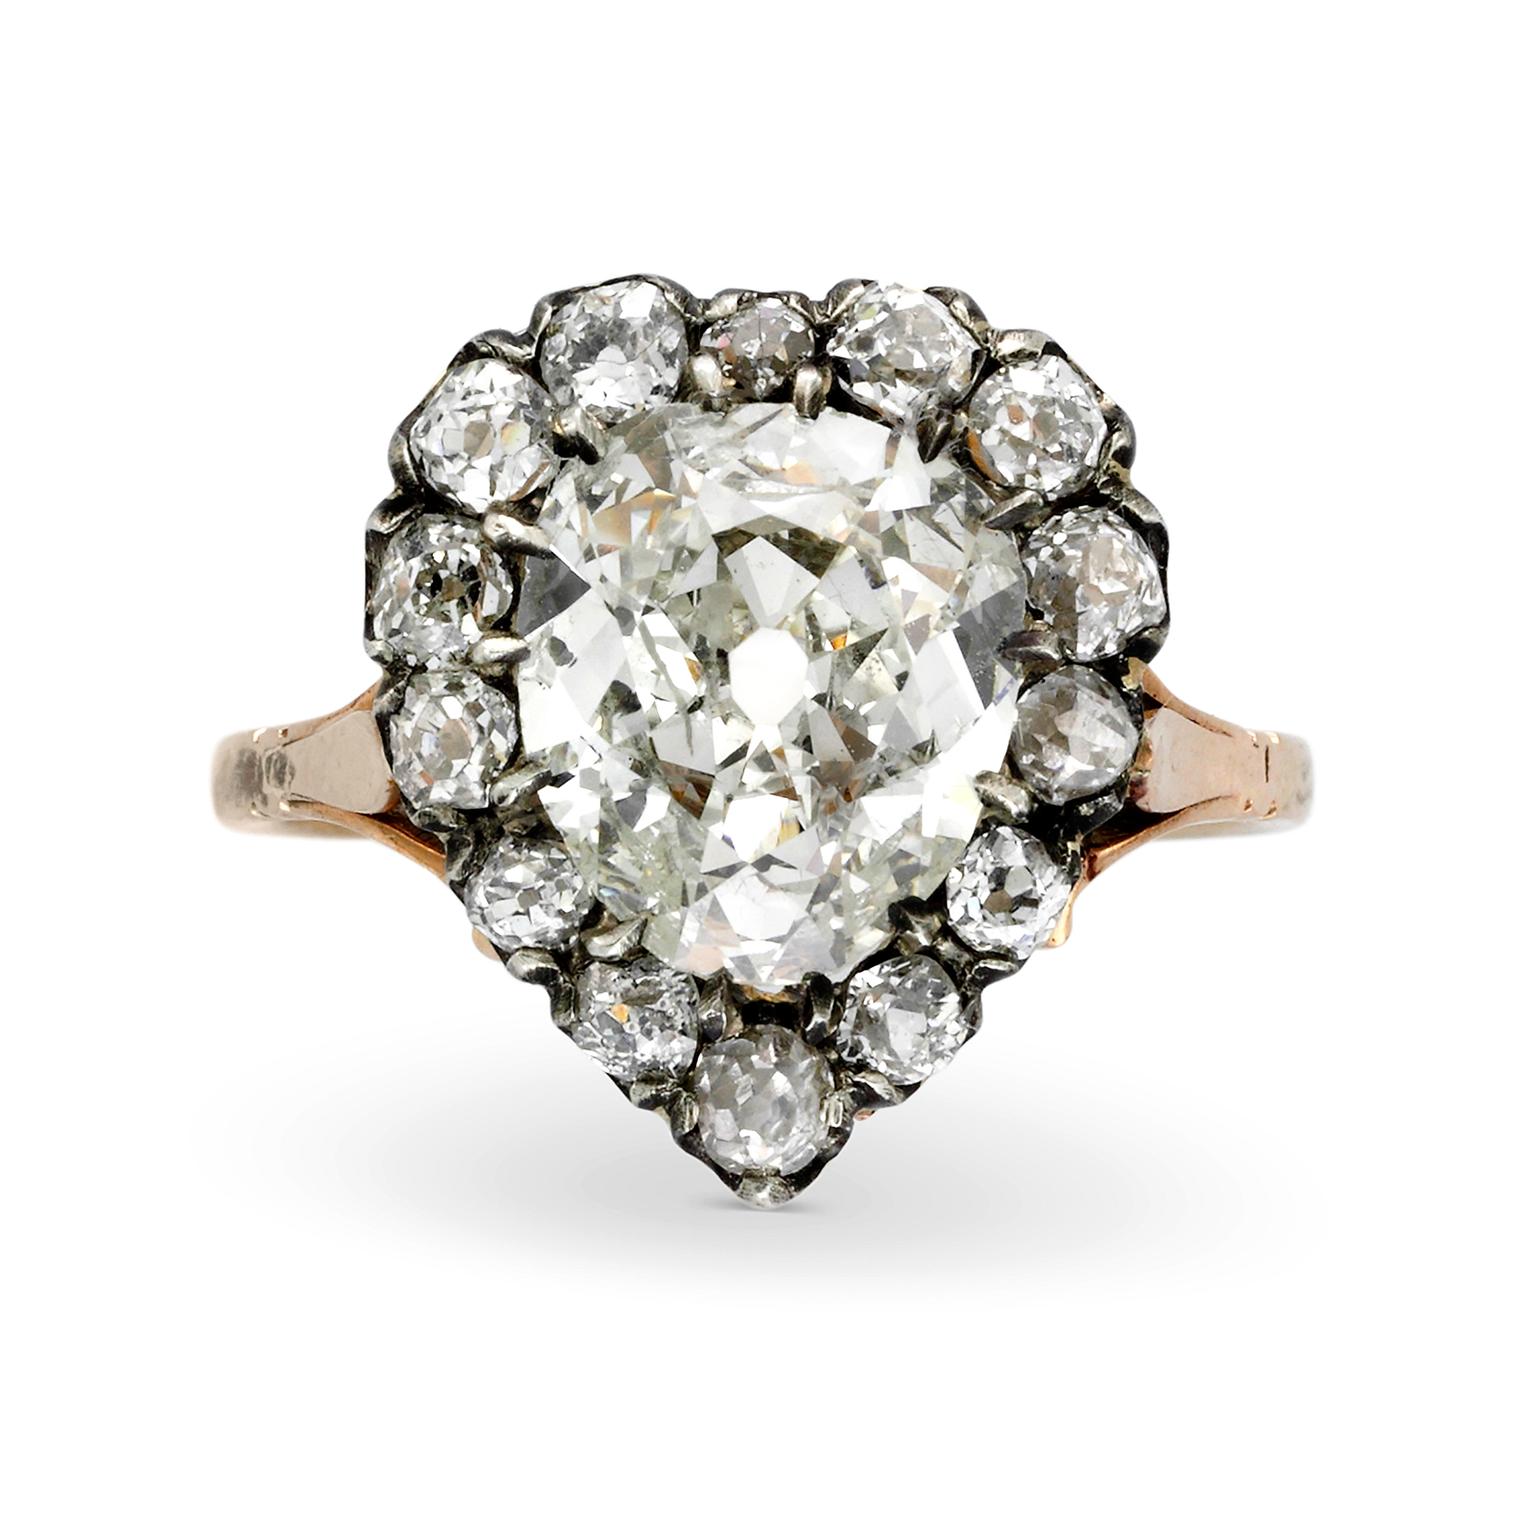 Simon Teakle single mine-cut diamond heart ring